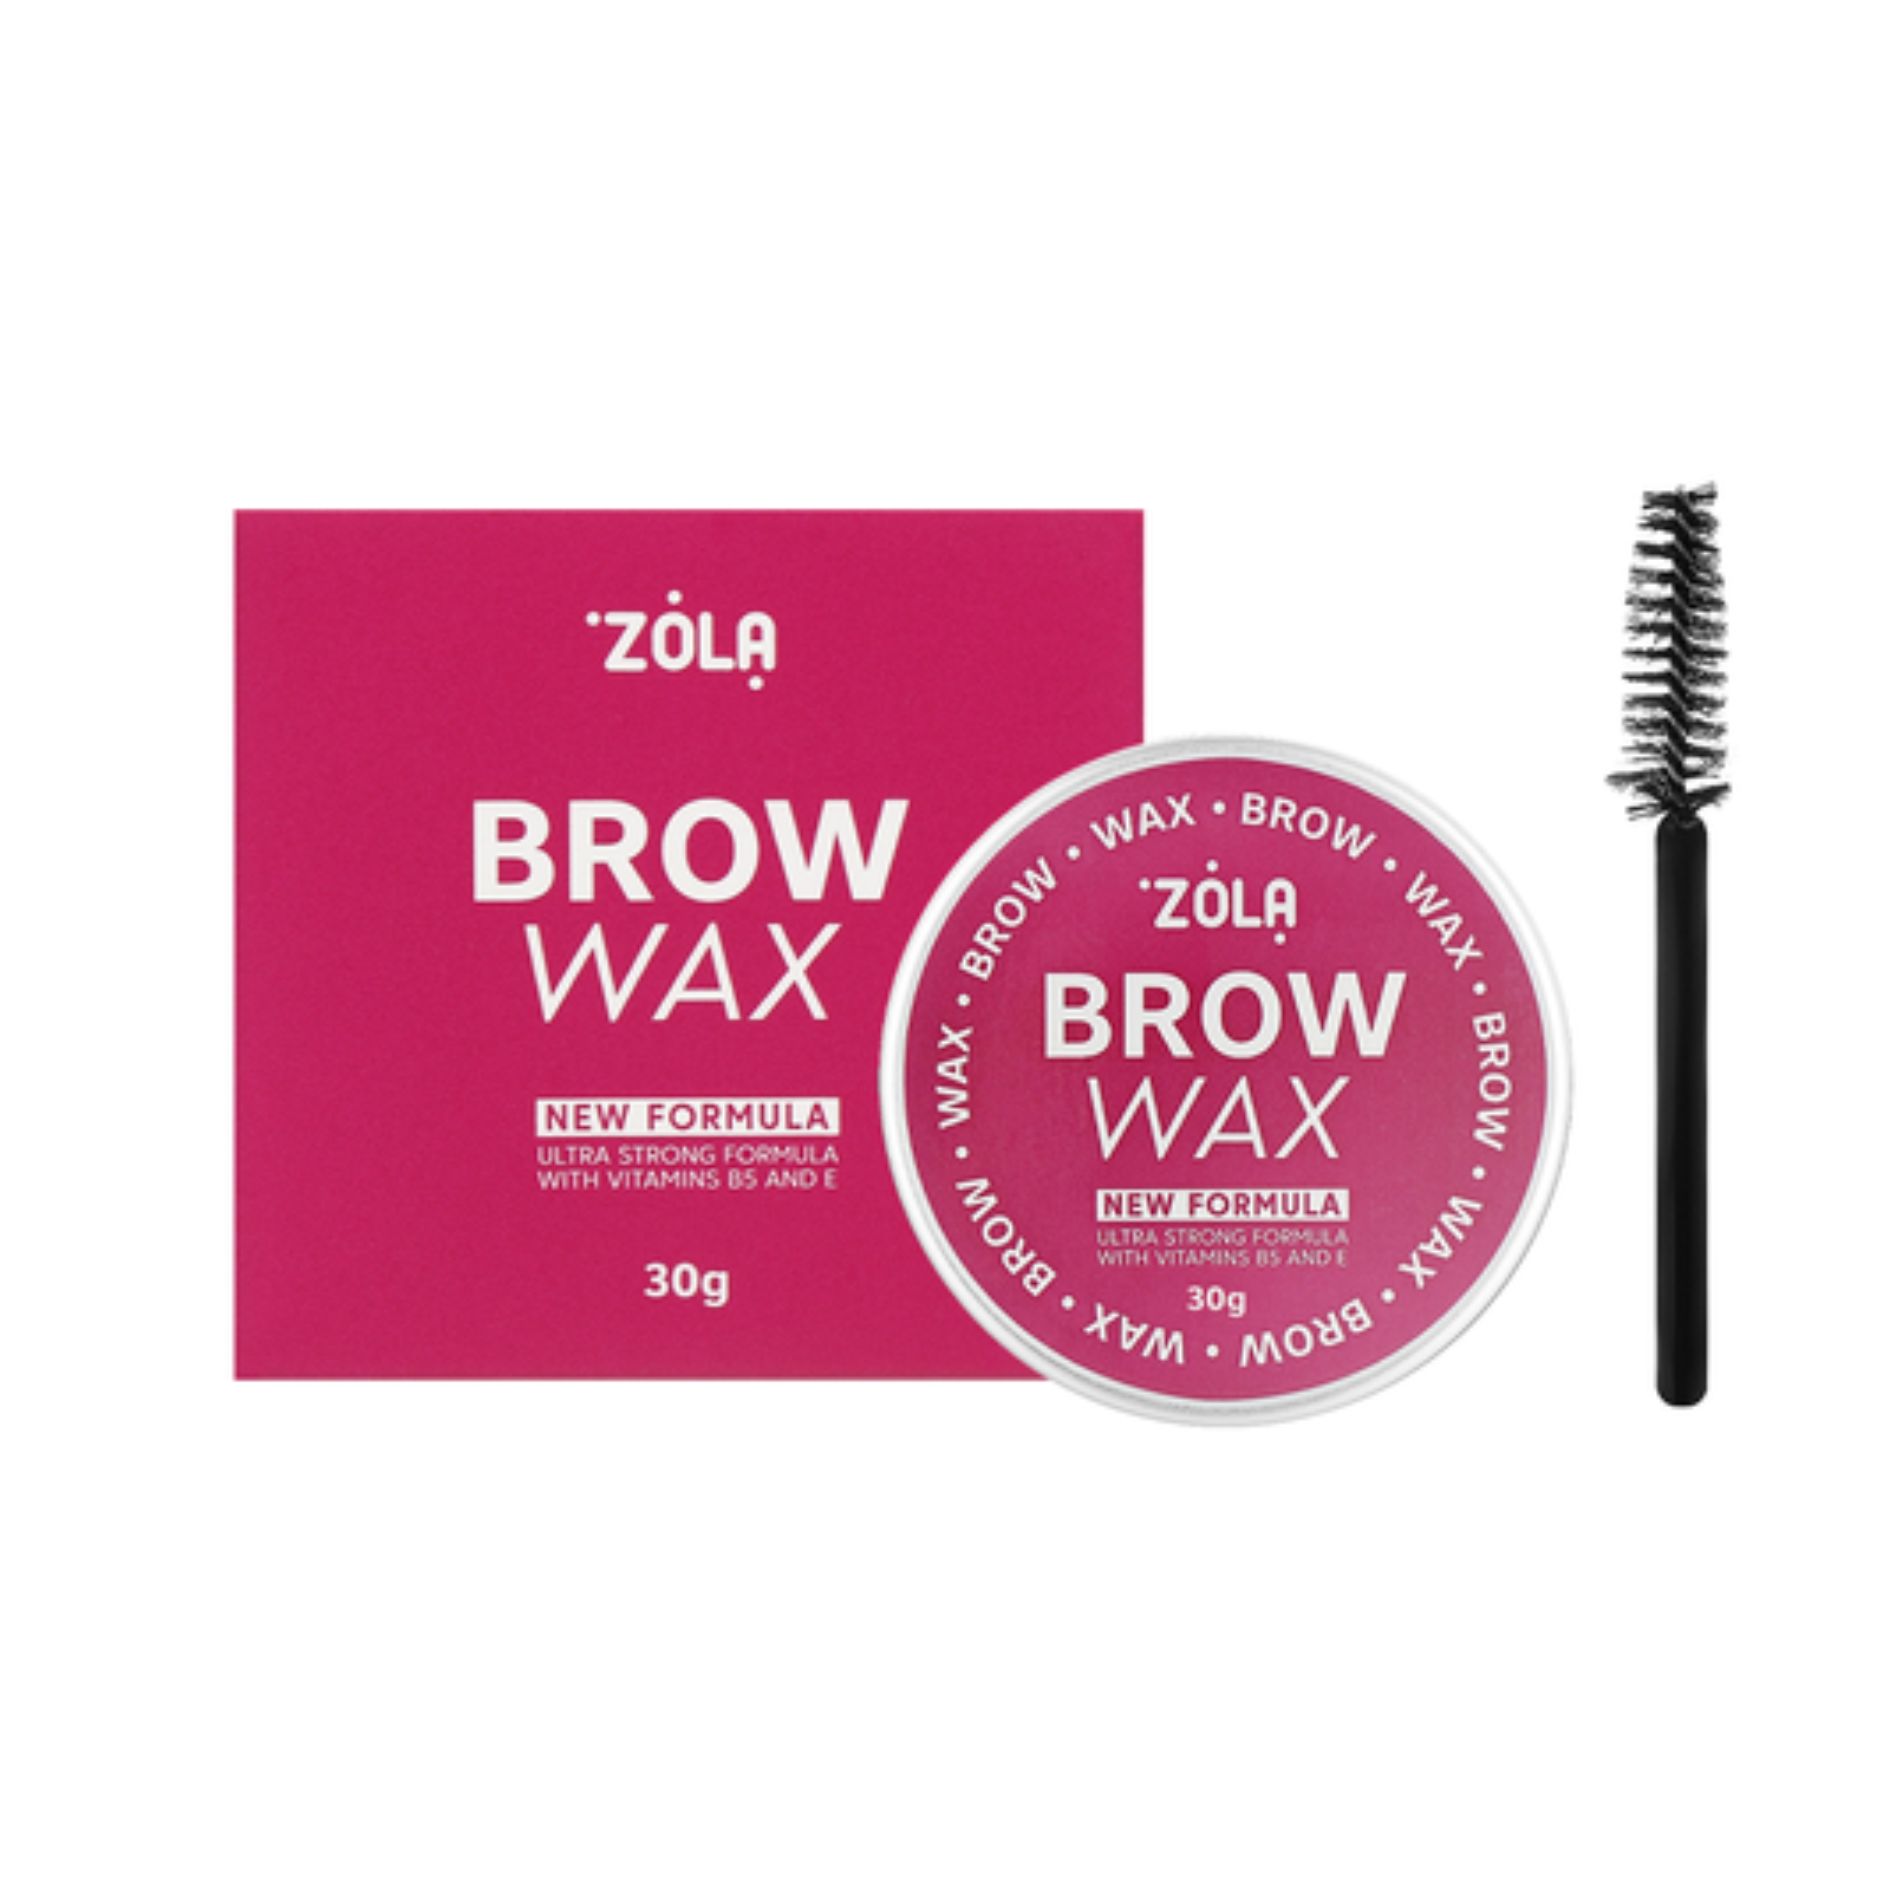 ZOLA Brow Wax 30g